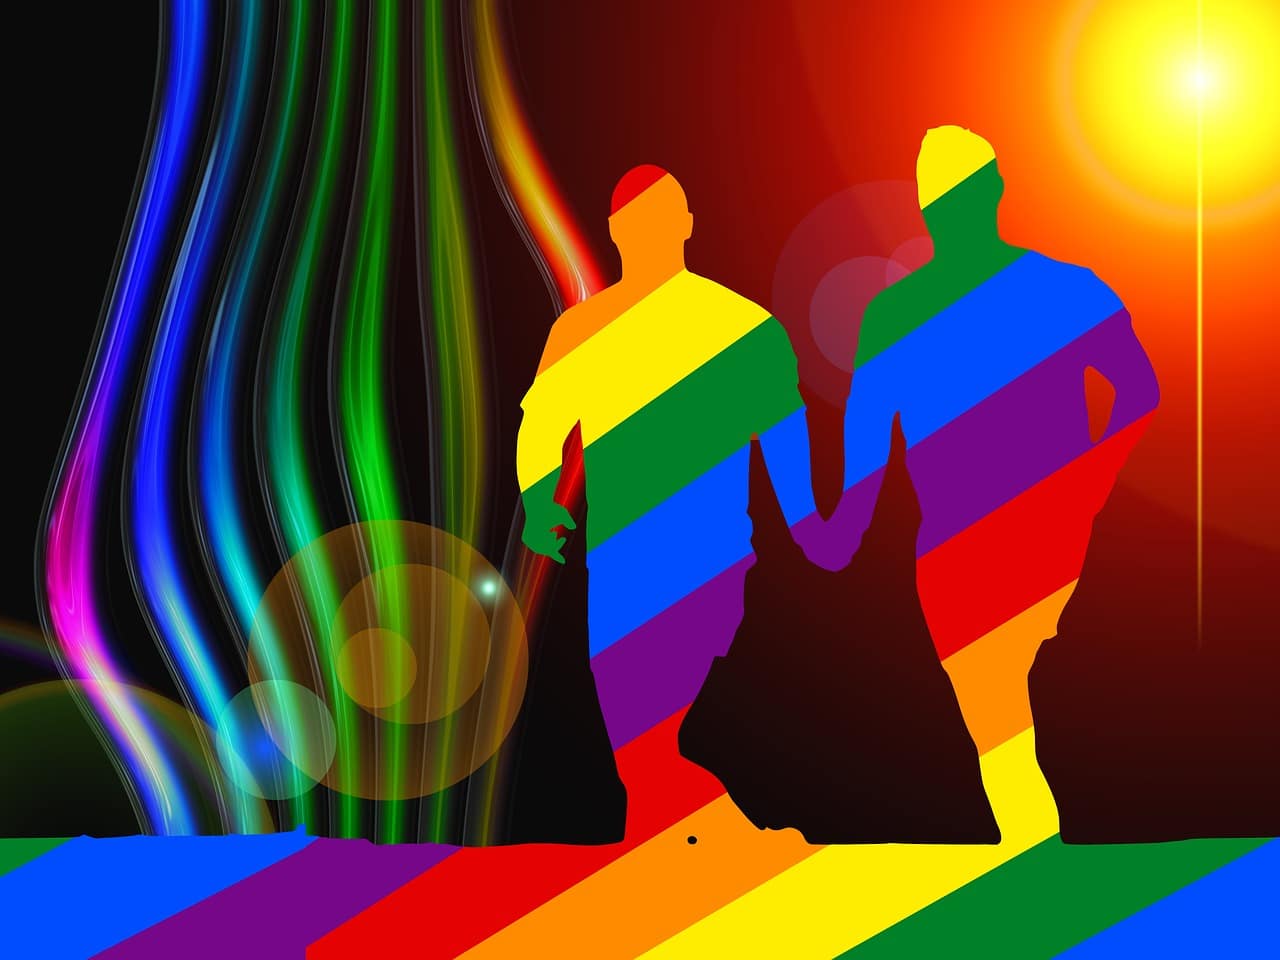 lie detector test in Croydon, homosexuality